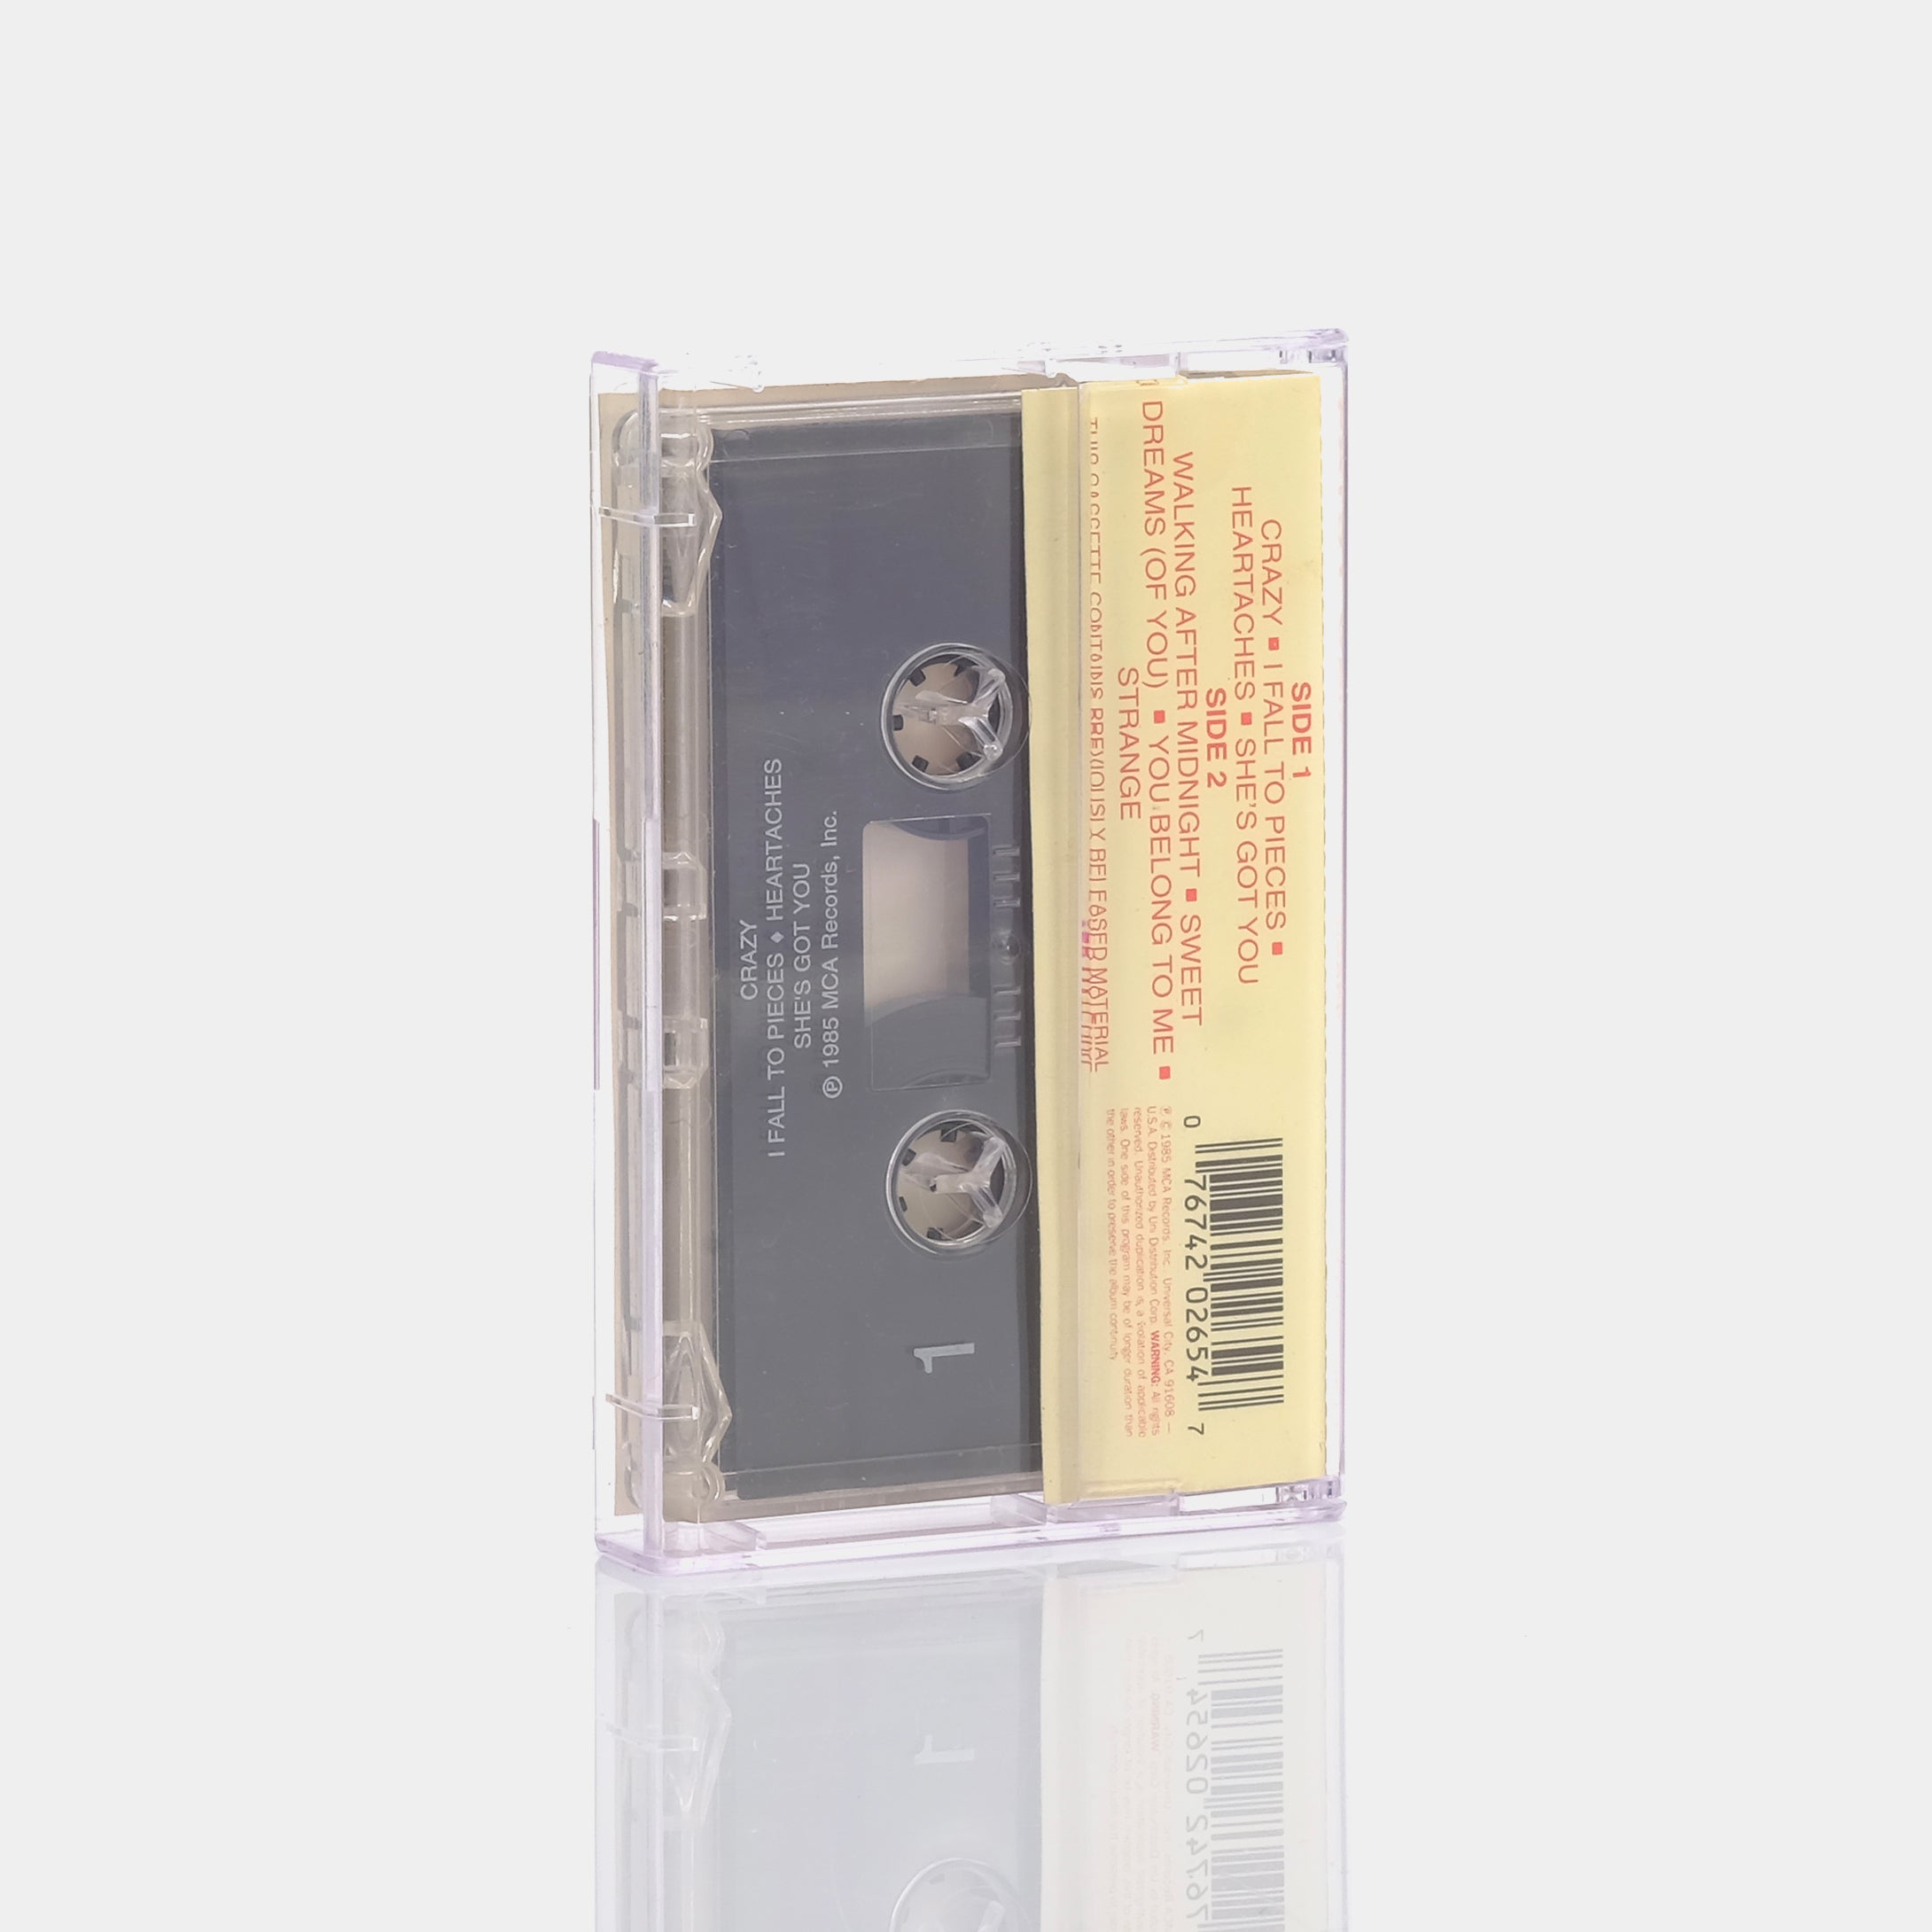 Patsy Cline - Heartaches Cassette Tape